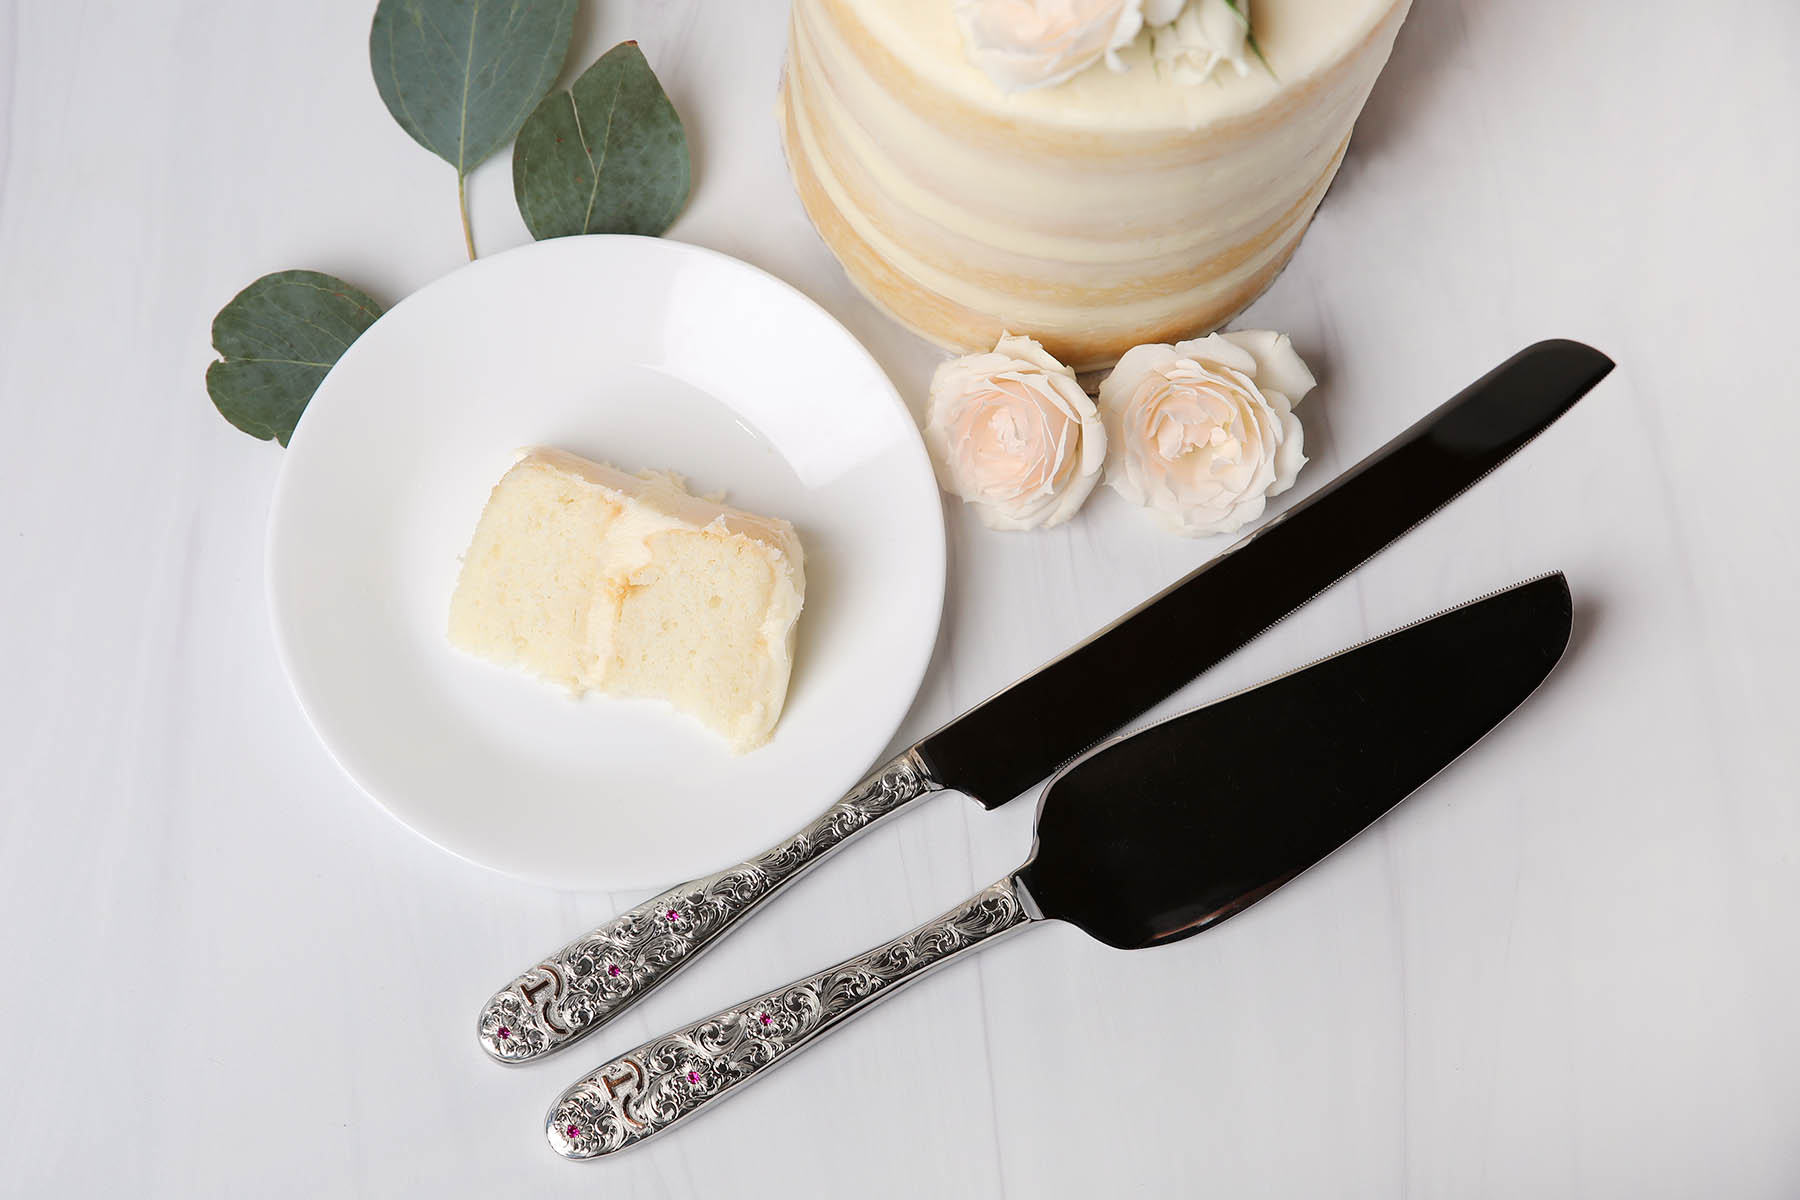 Cutting & Icing Knives – Bake House - The Baking Treasure